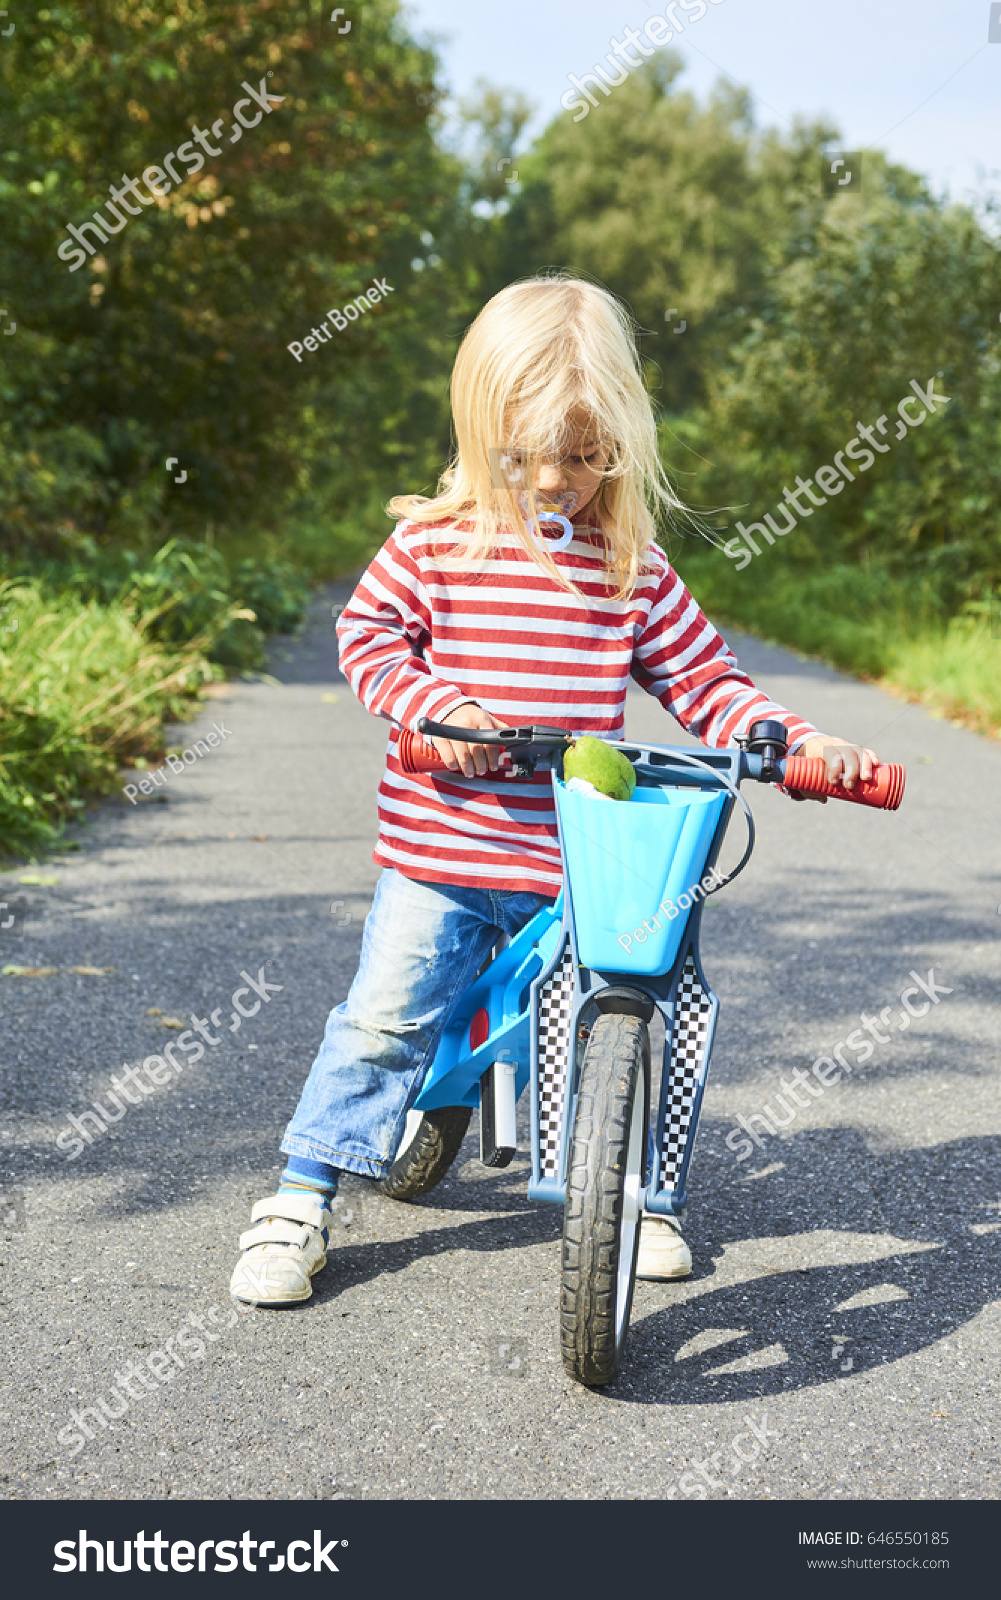 street girl balance bike